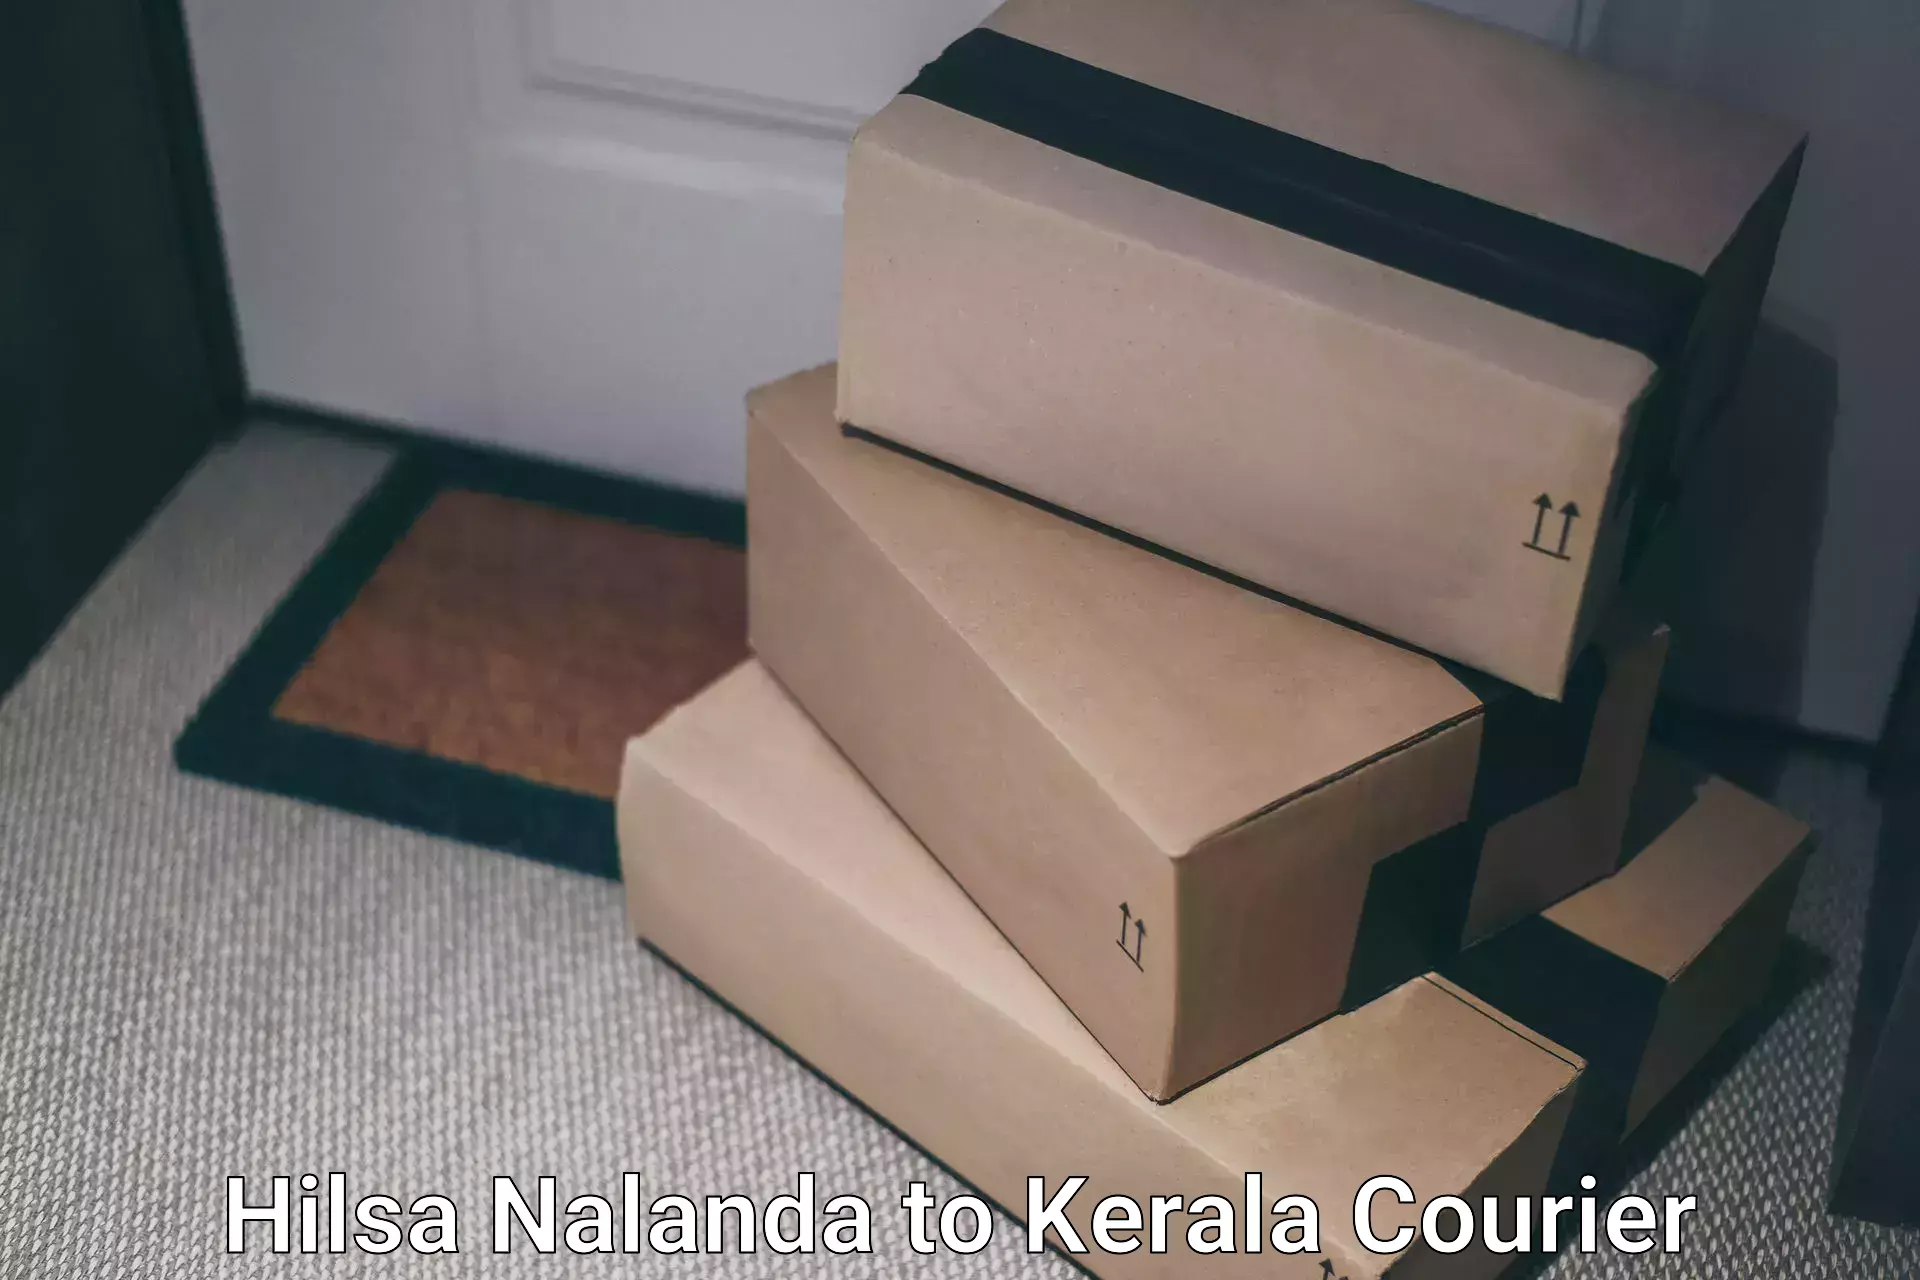 Express delivery network Hilsa Nalanda to Malappuram